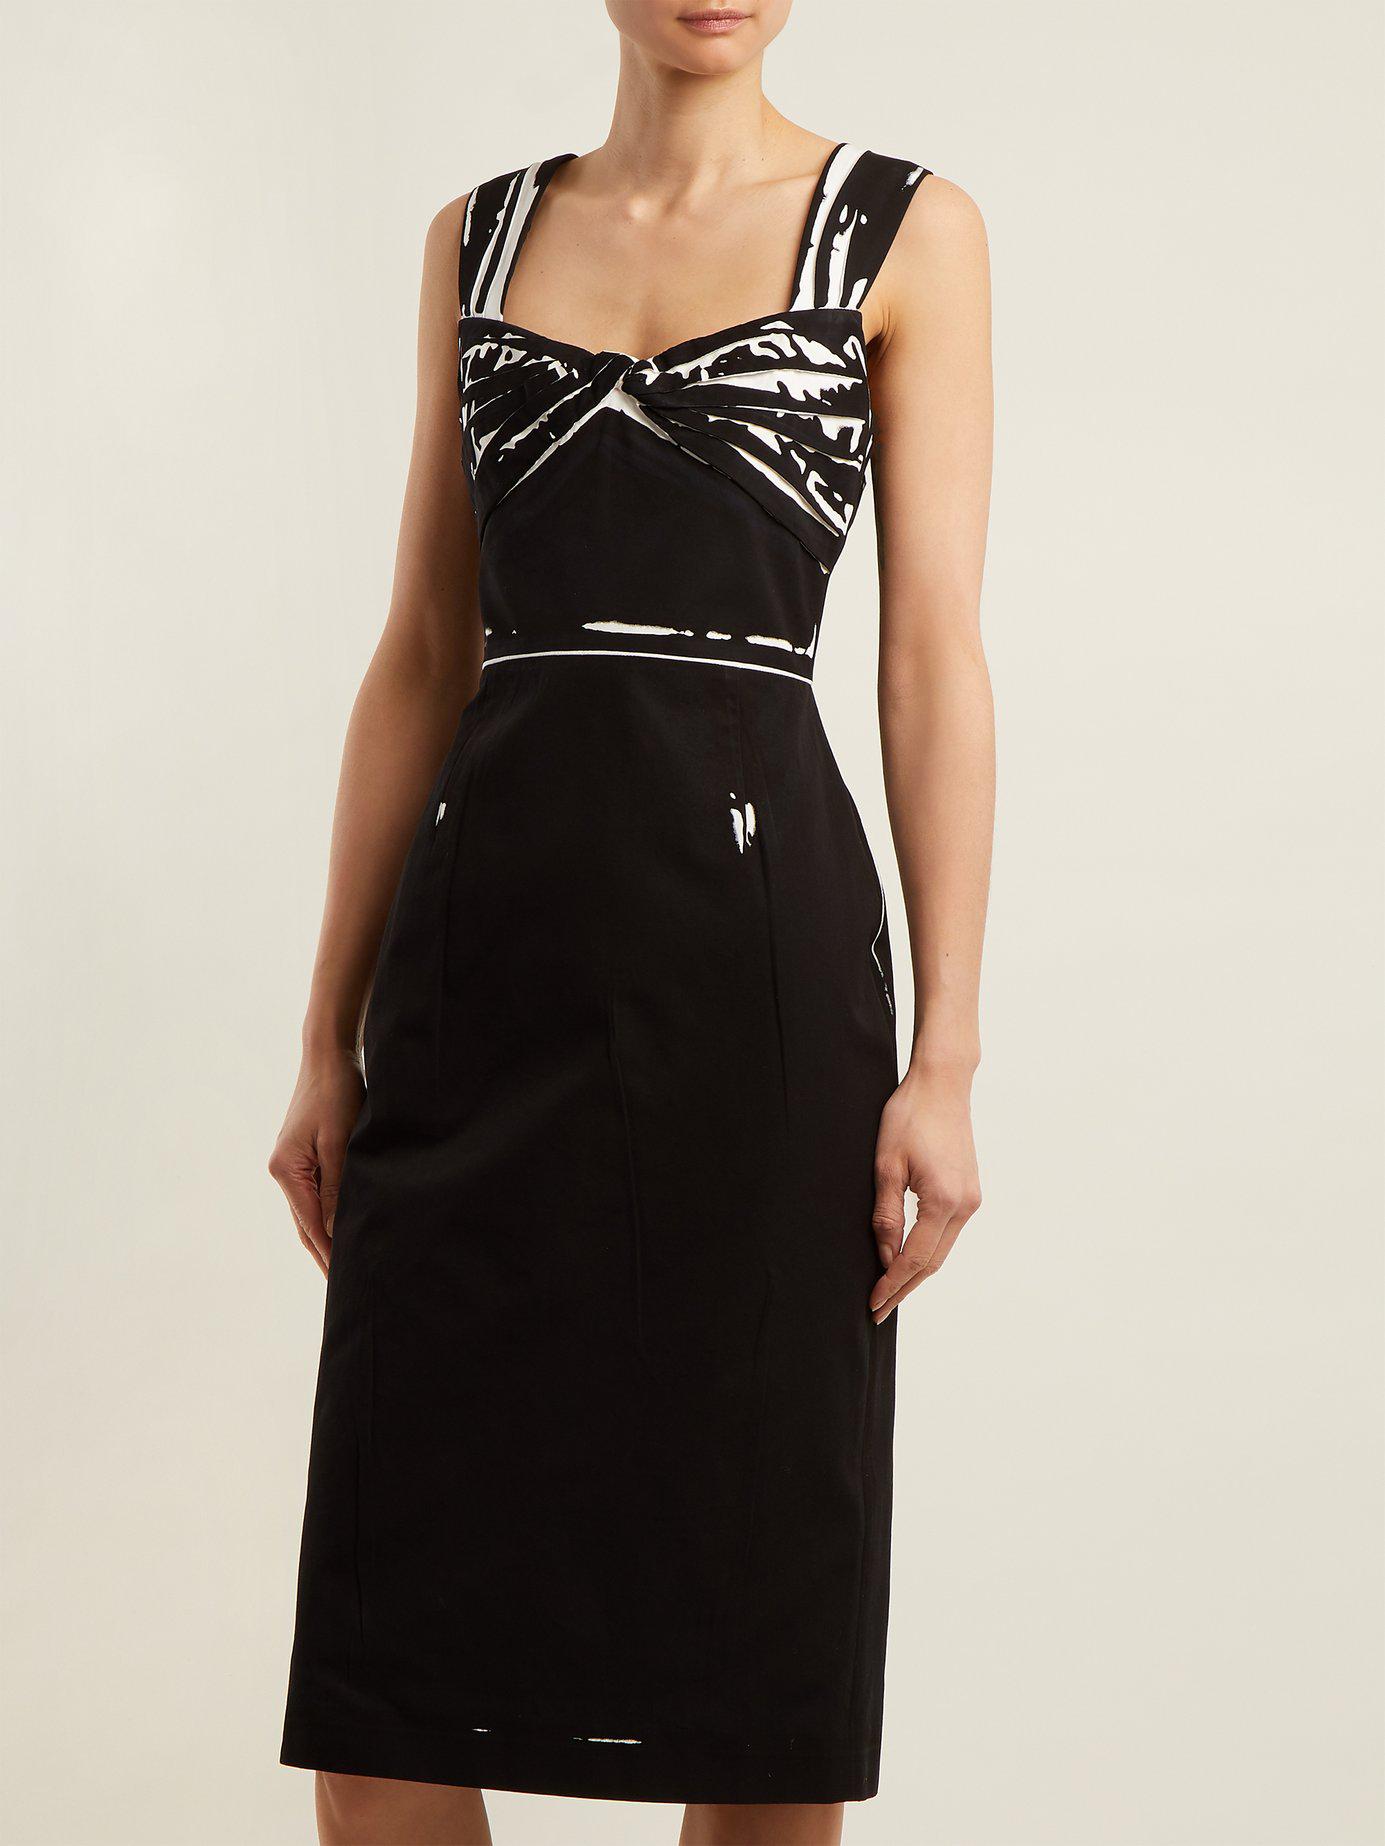 Prada Overprinted-print Cotton Dress in Black - Lyst